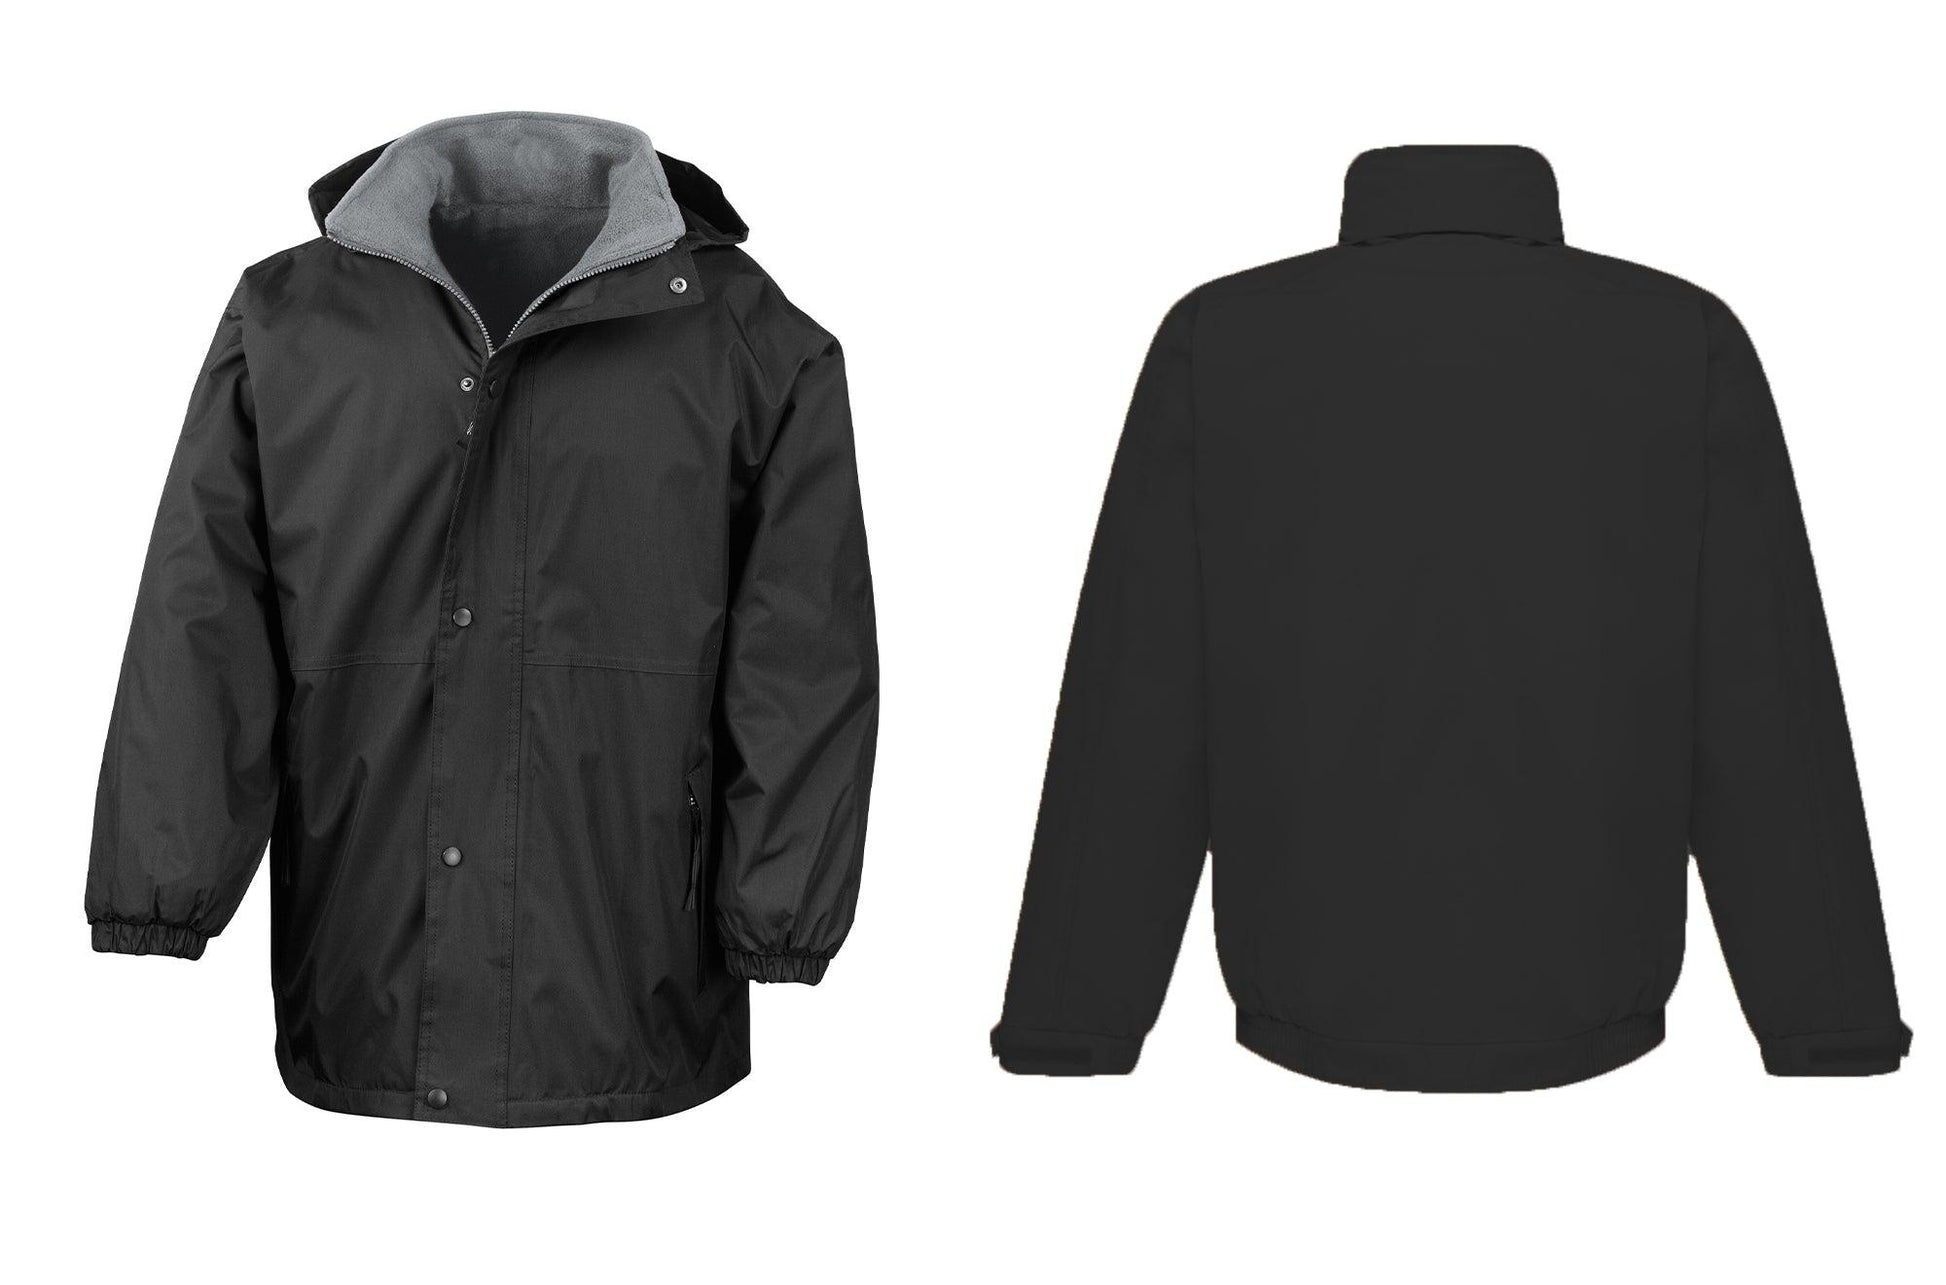 Reversible StormDri 4000 jacket R160A - Trustsport